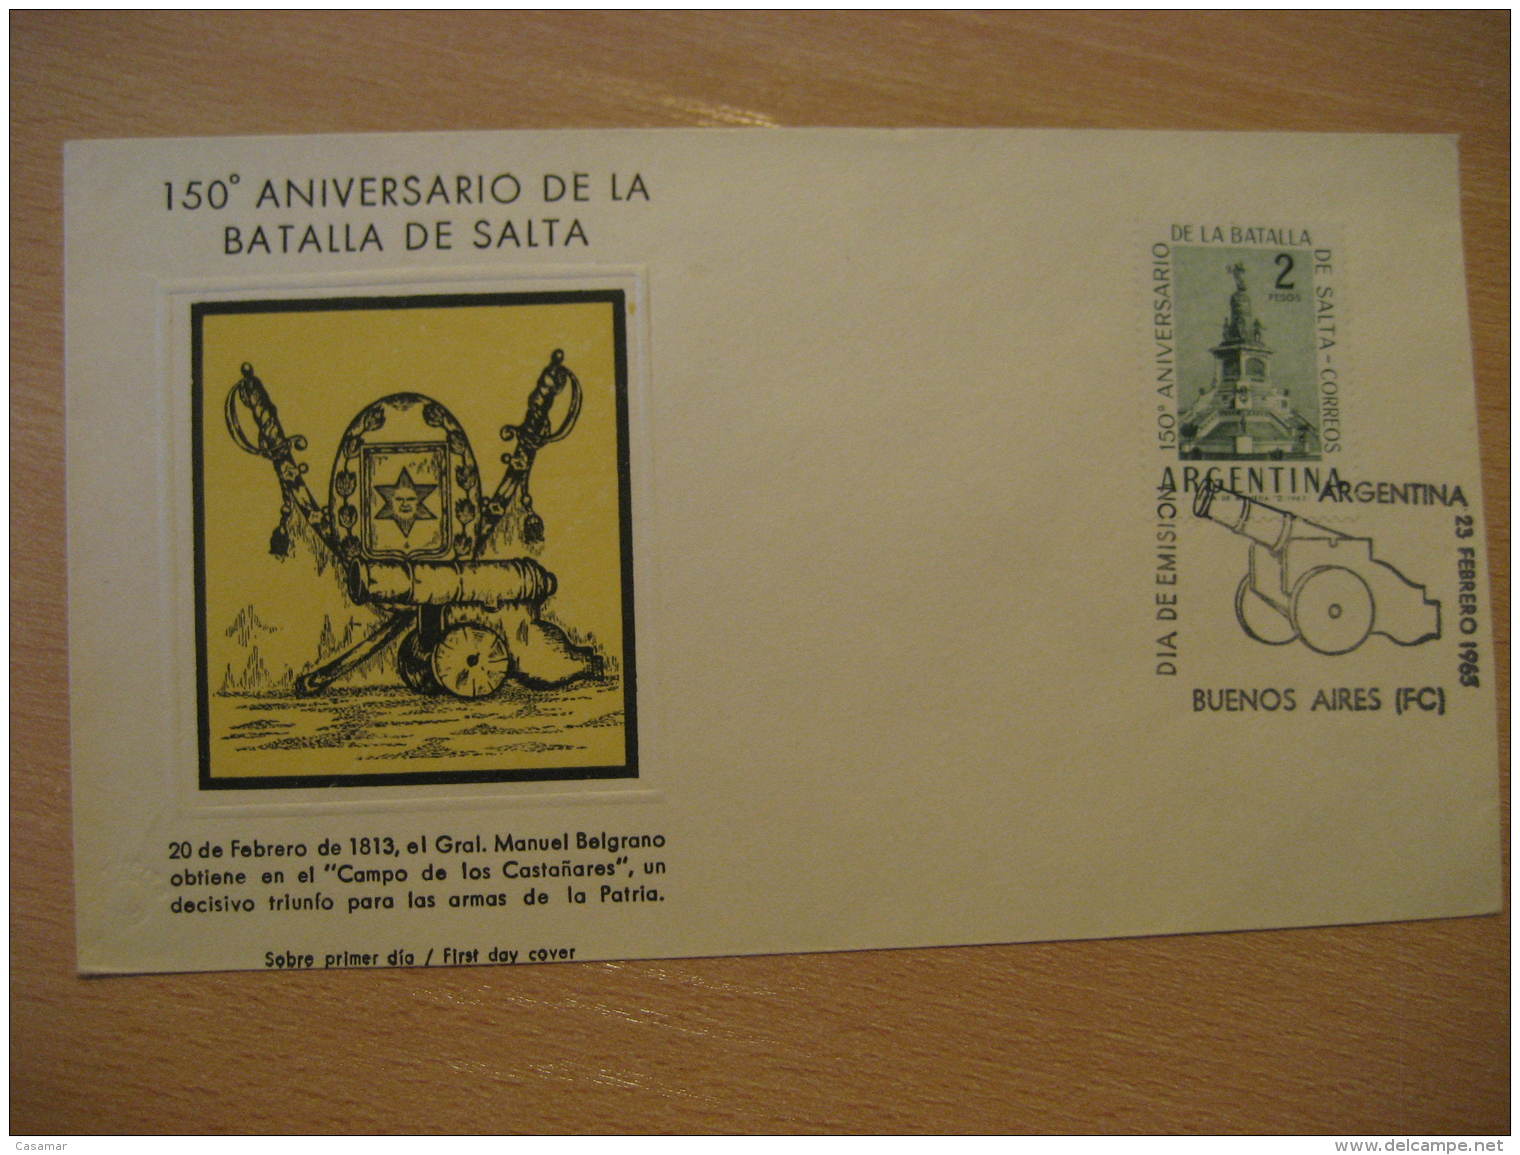 150 ANV BATALLA DE SALTA Military BUENOS AIRES 1963 FDC Cancel Cover ARGENTINA - Militaria